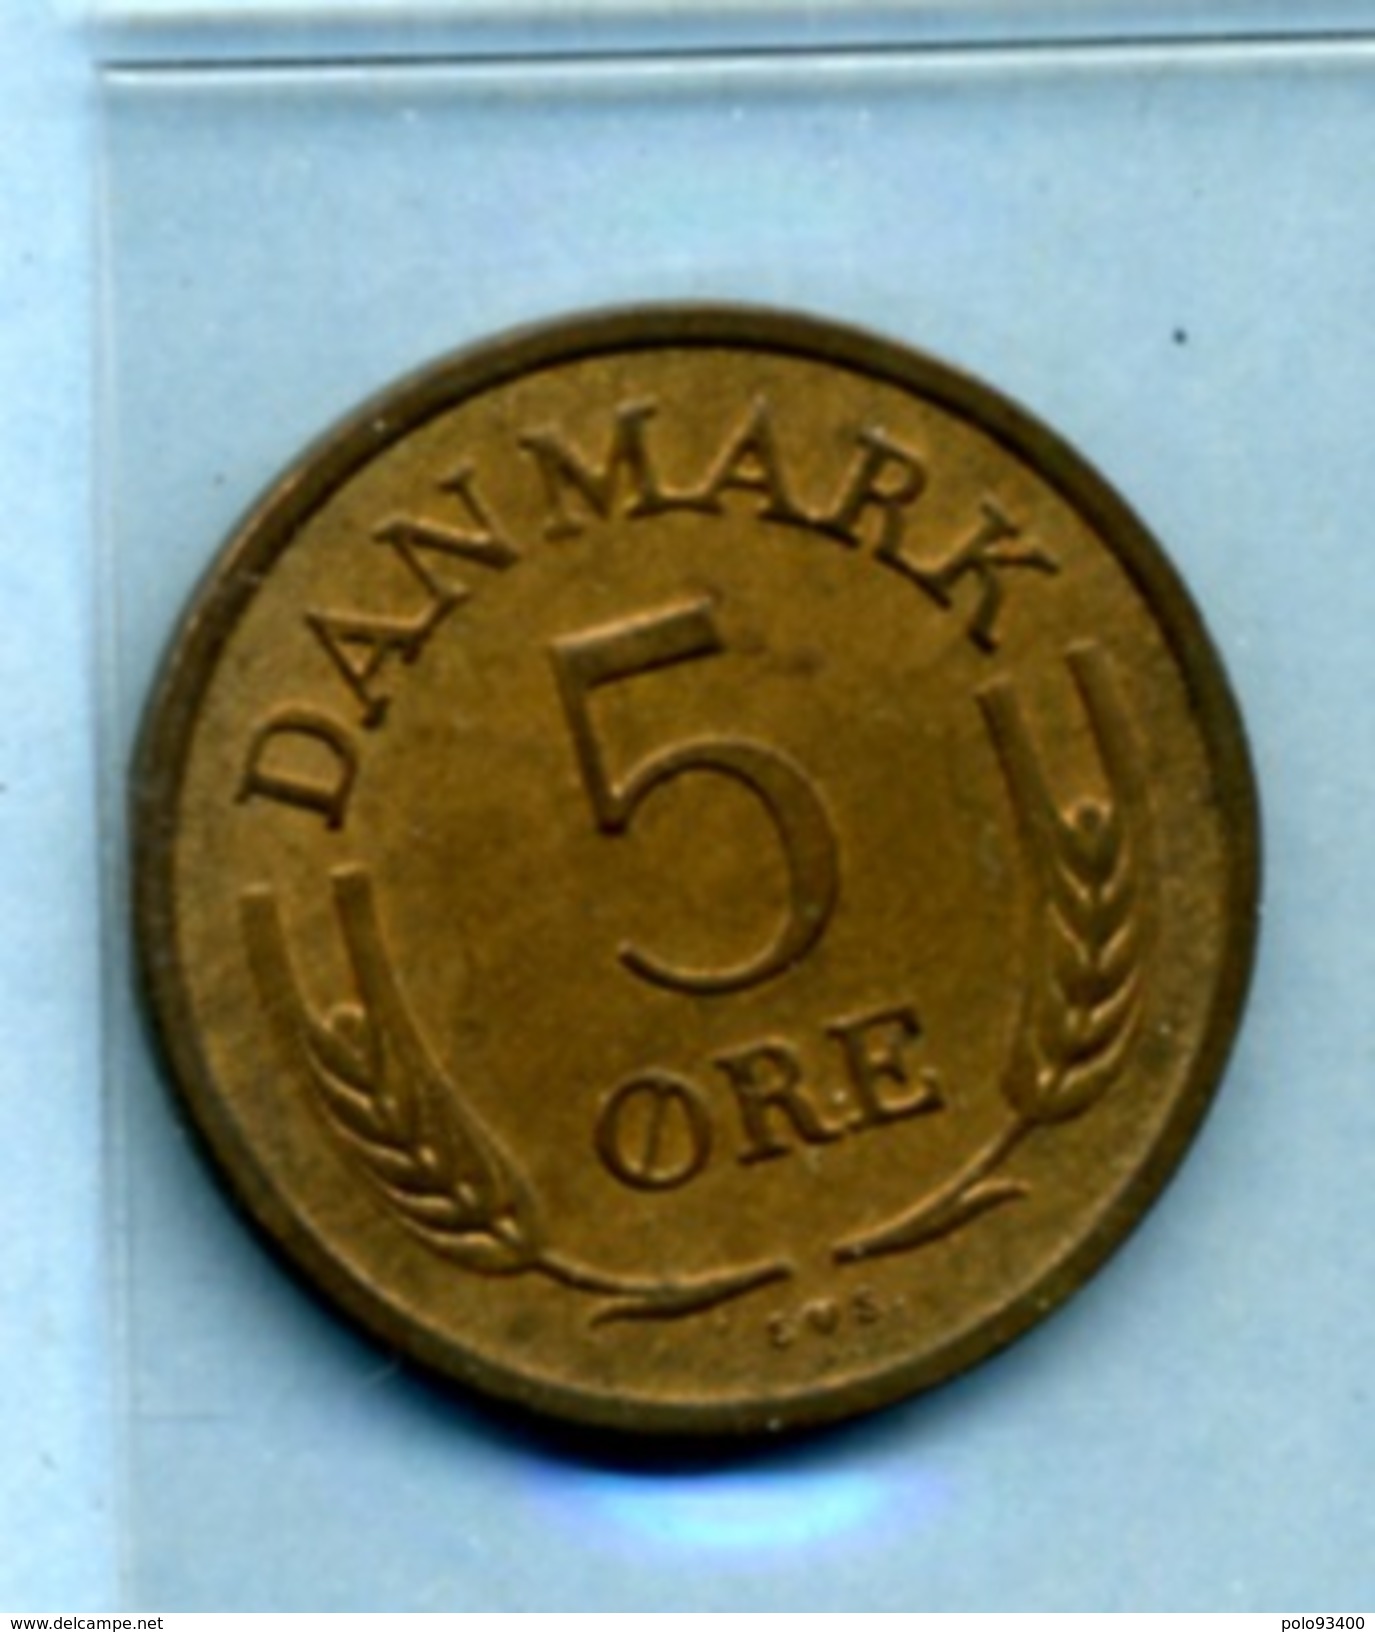 1979  5 Ore - Denmark